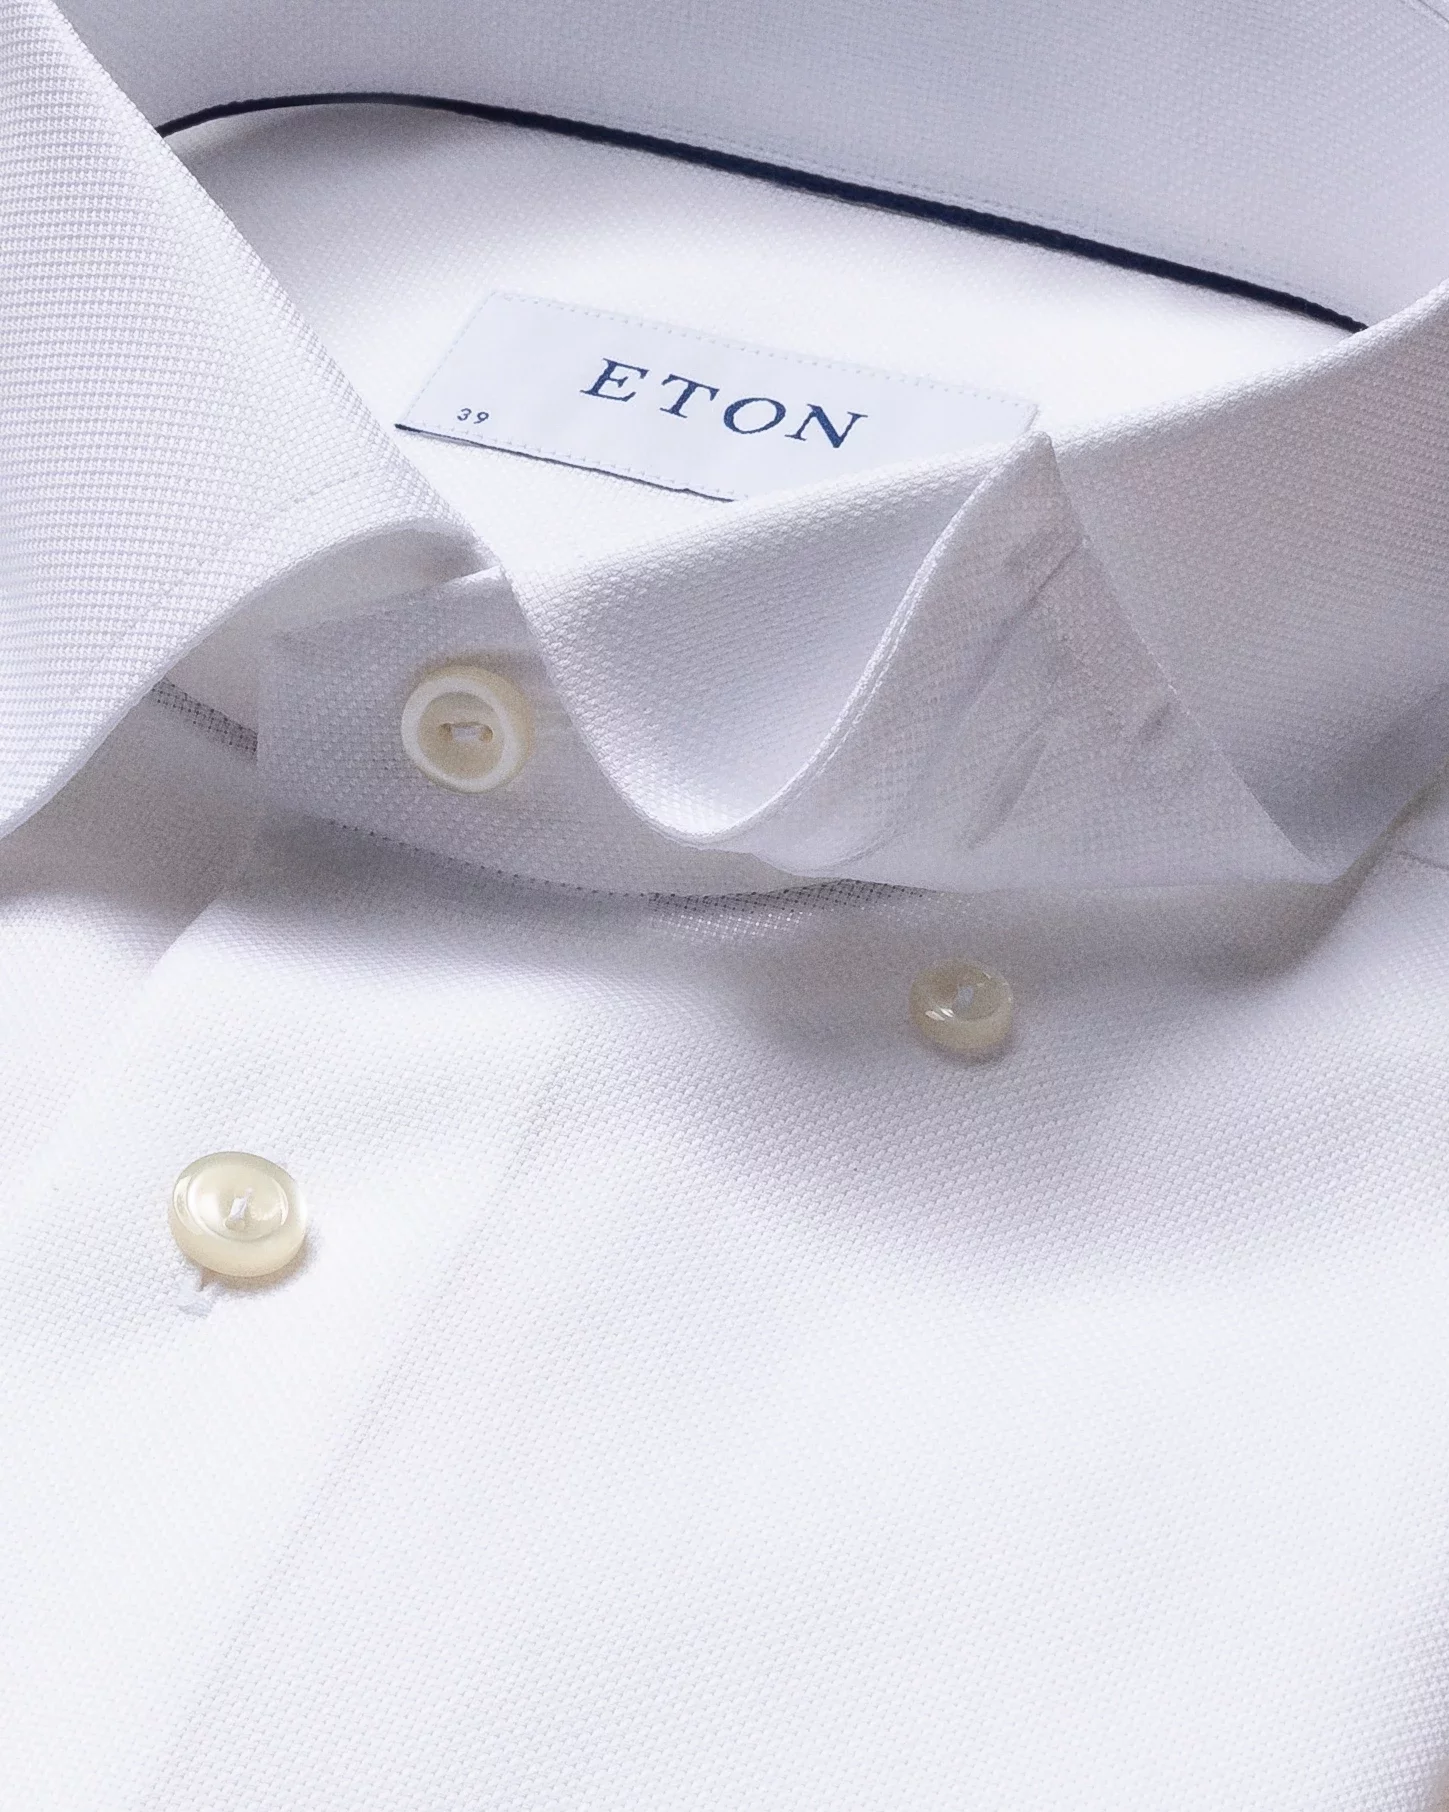 Eton - white royal oxford shirt